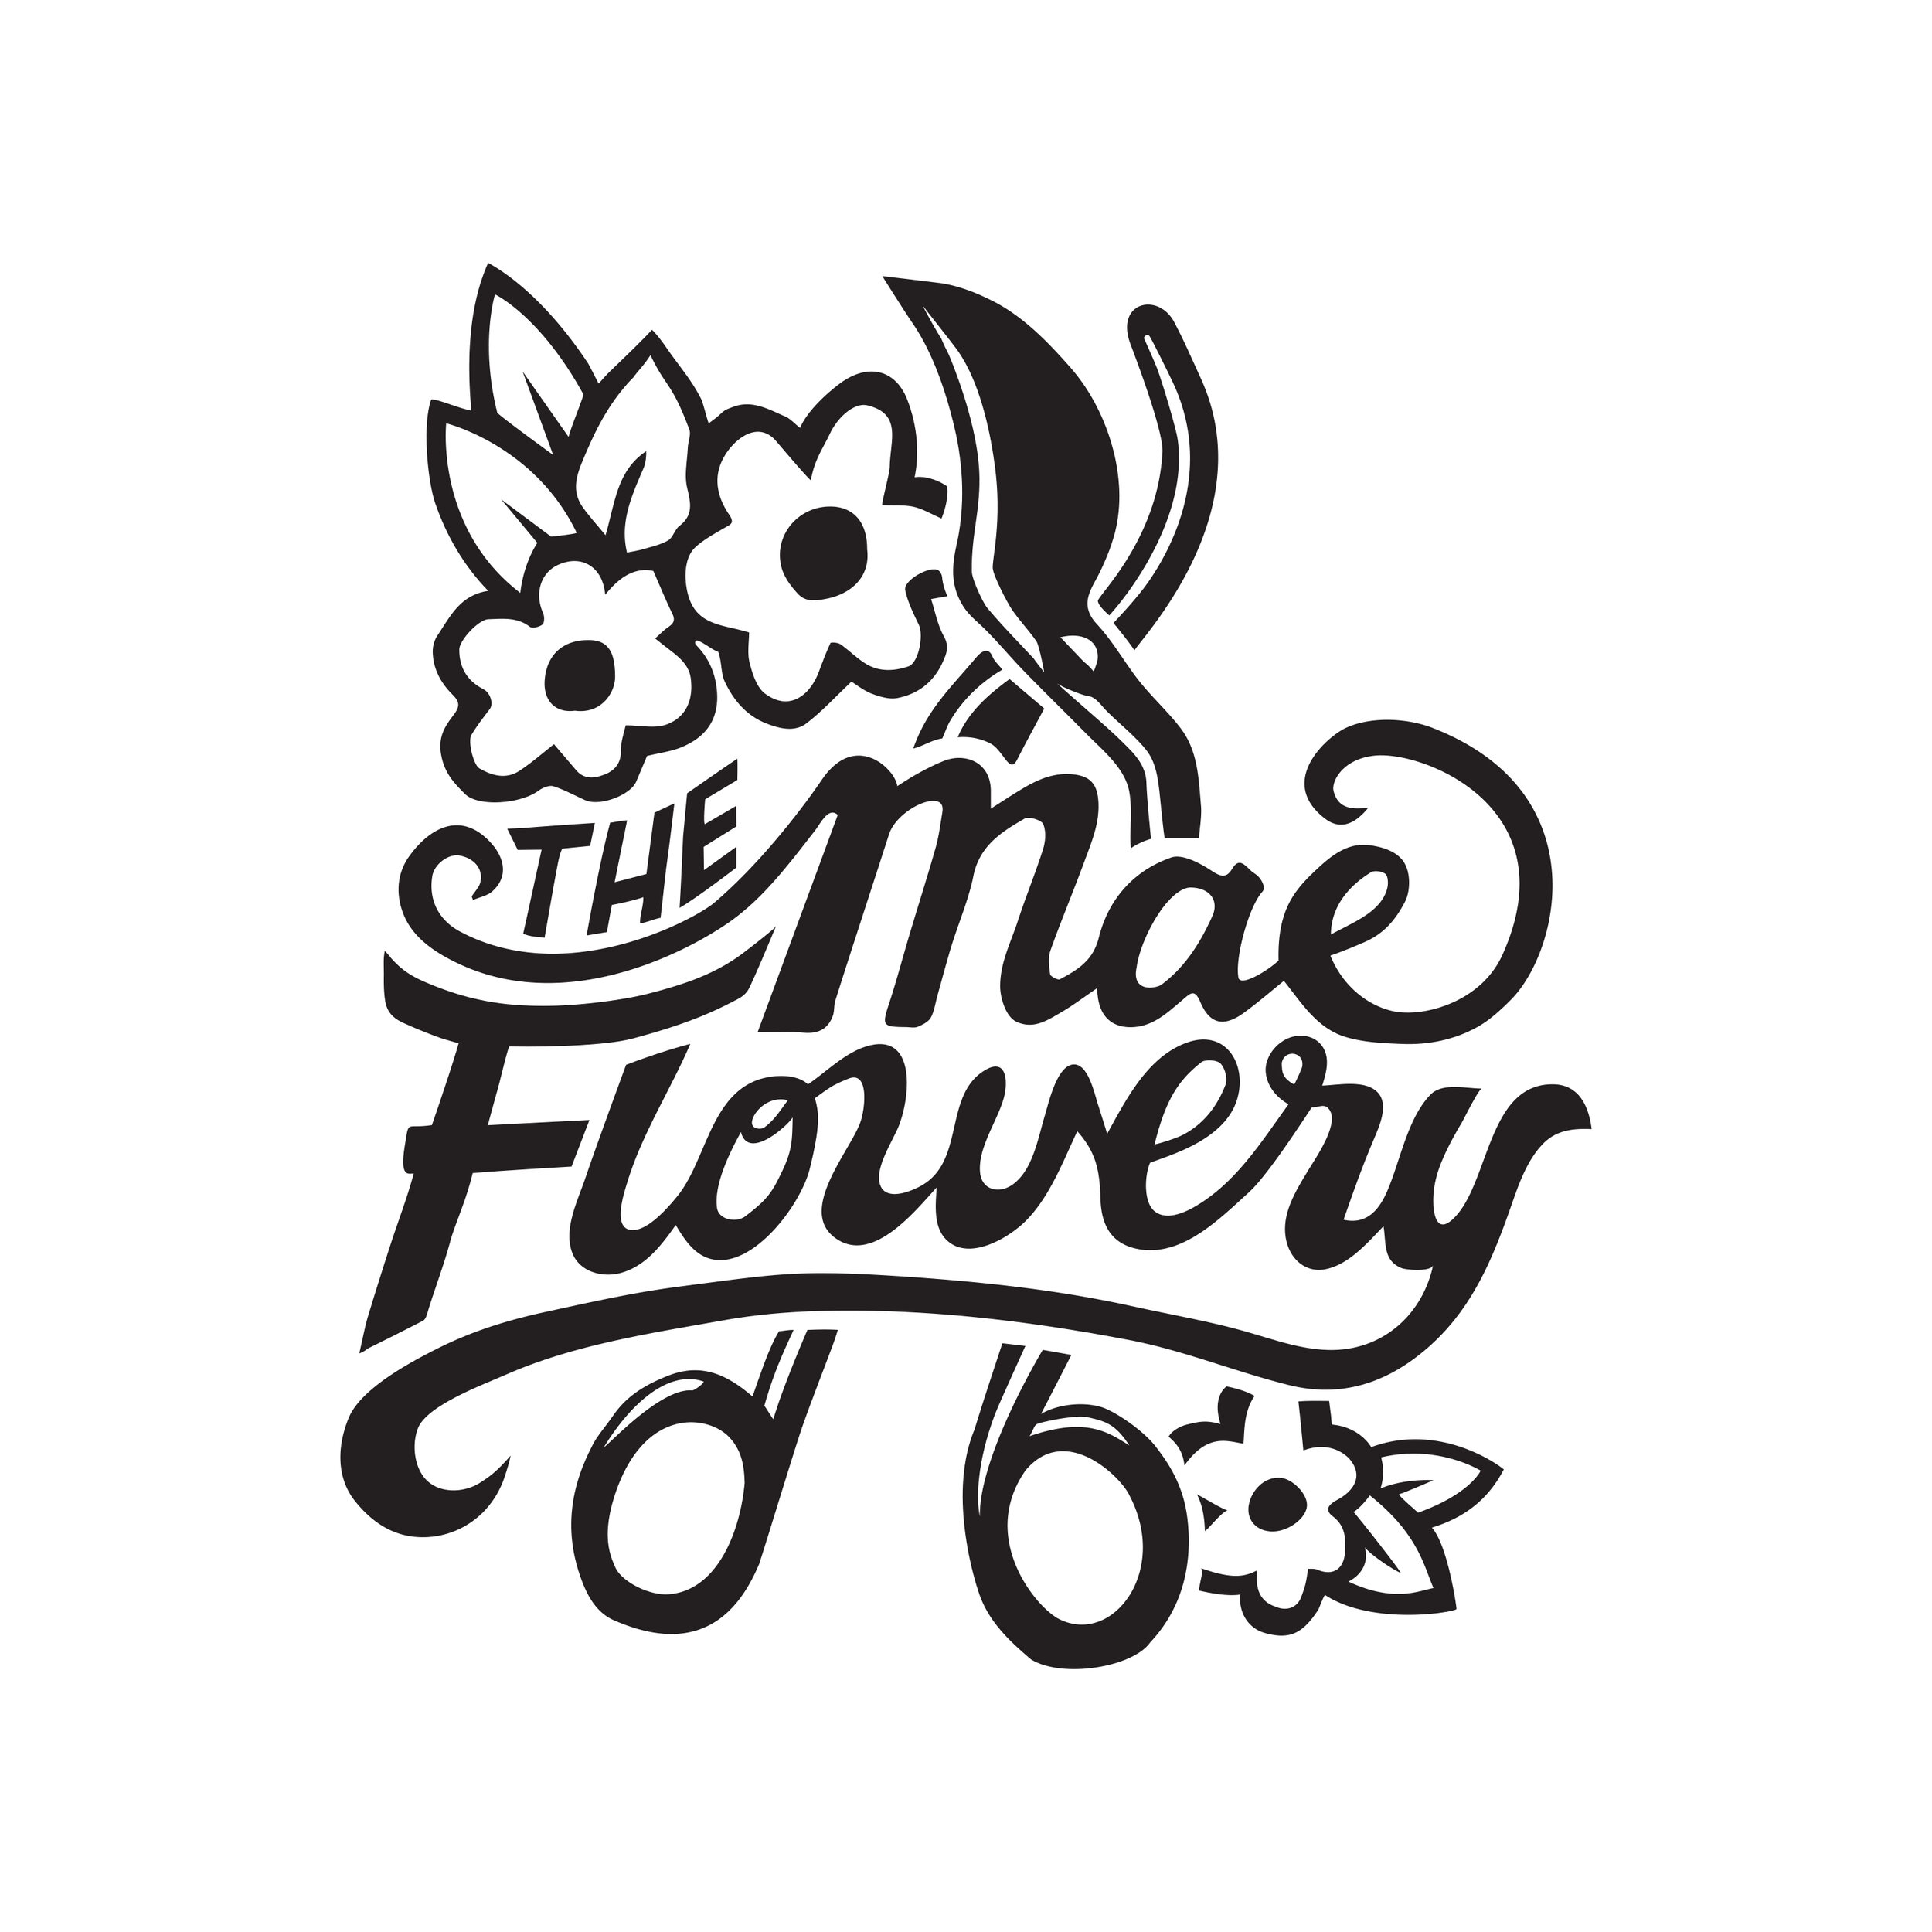 maeflowery logo with white.jpg